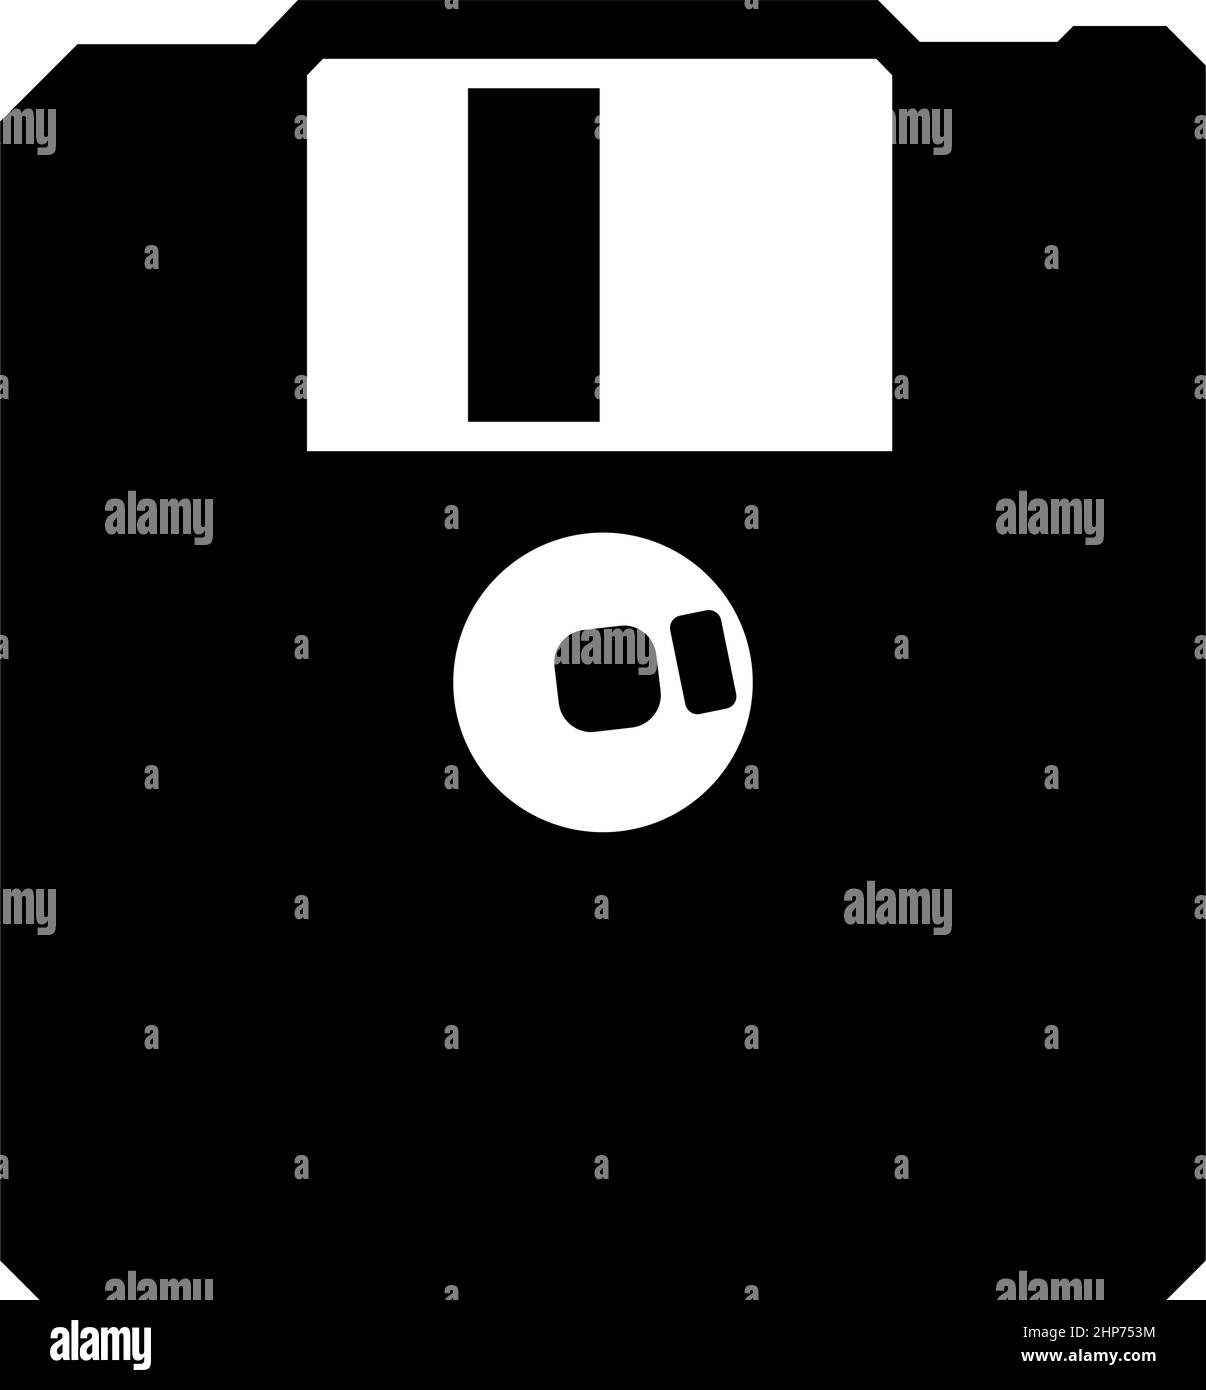 Diskettenlaufwerk Speicher Konzept Symbol schwarz Farbe Vektor Illustration flache Stil Bild Stock Vektor